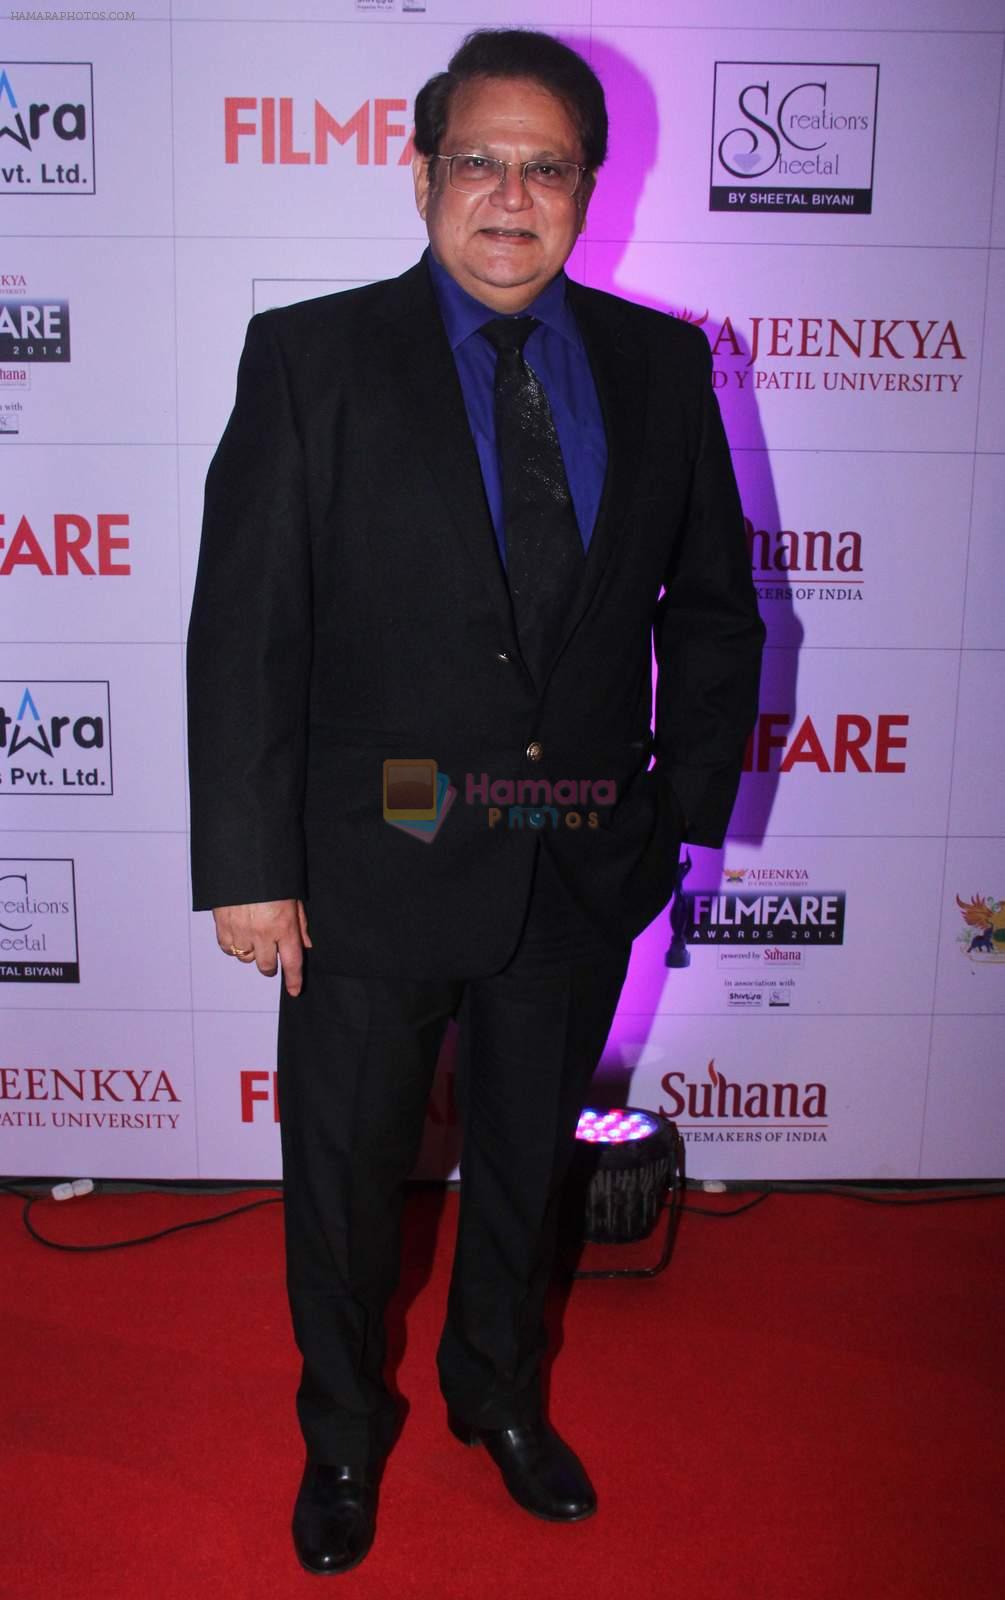 Mahesh Kothare at the Red Carpet of _Ajeenkya DY Patil University Filmfare Awards